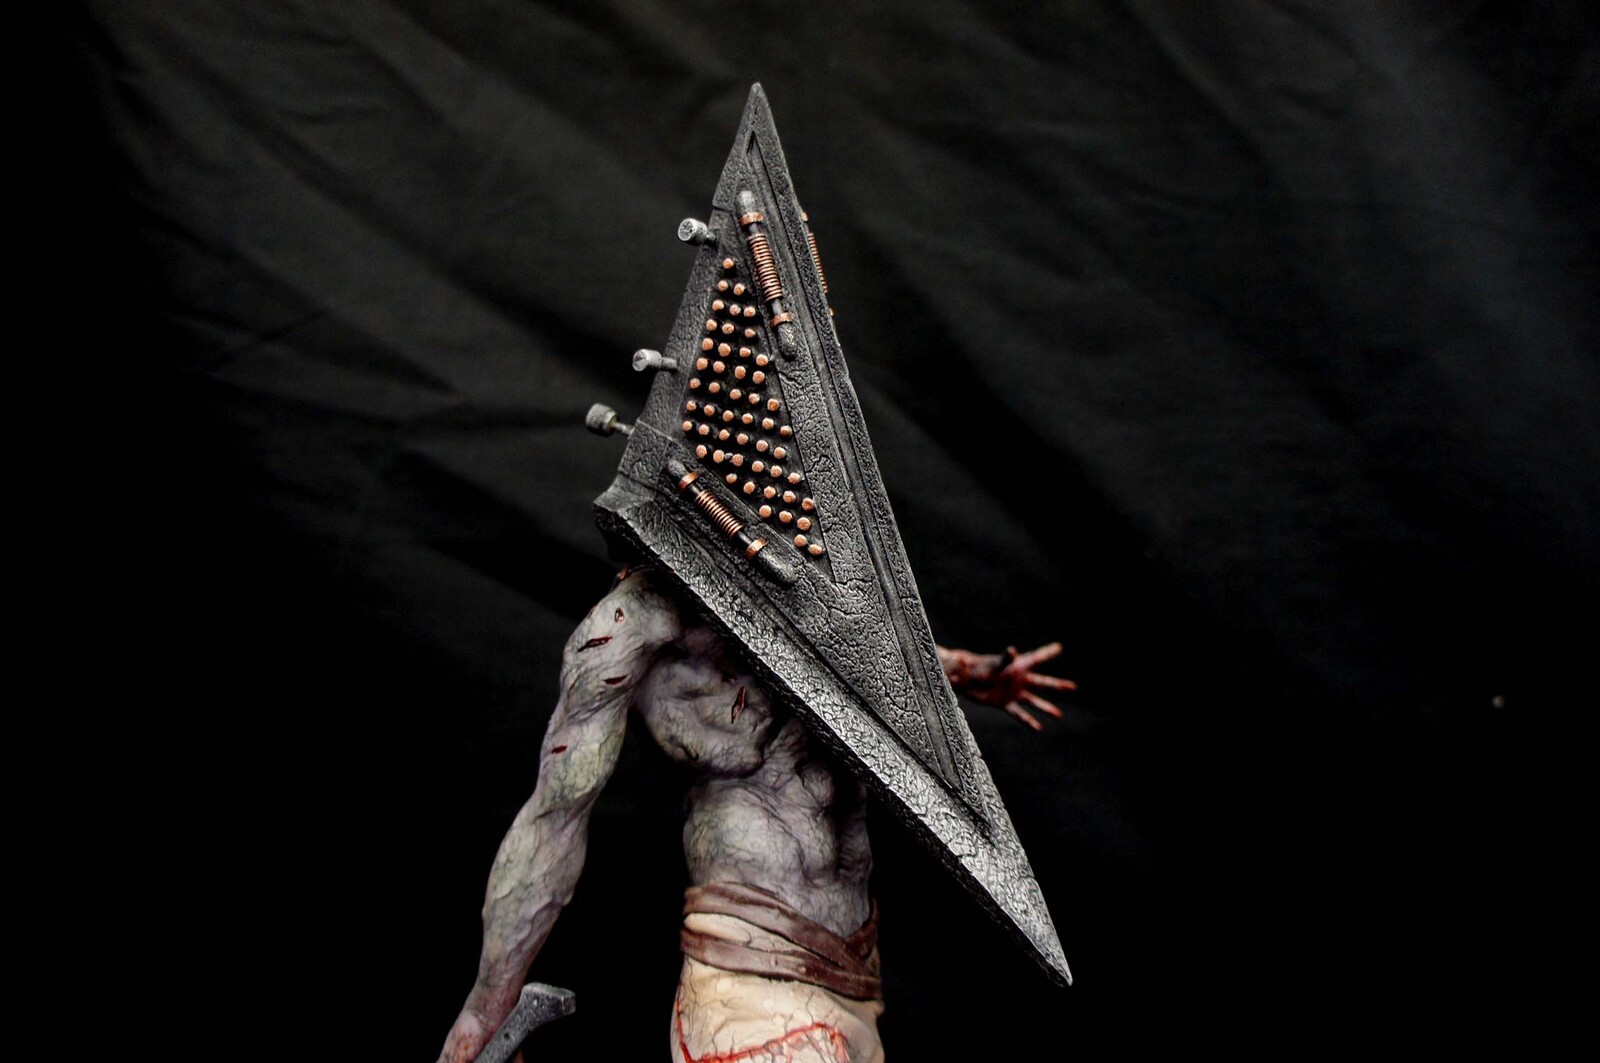 Silent Hill Pyramid Head (Bogeyman) Art Statue 
https://www.solidart.club/